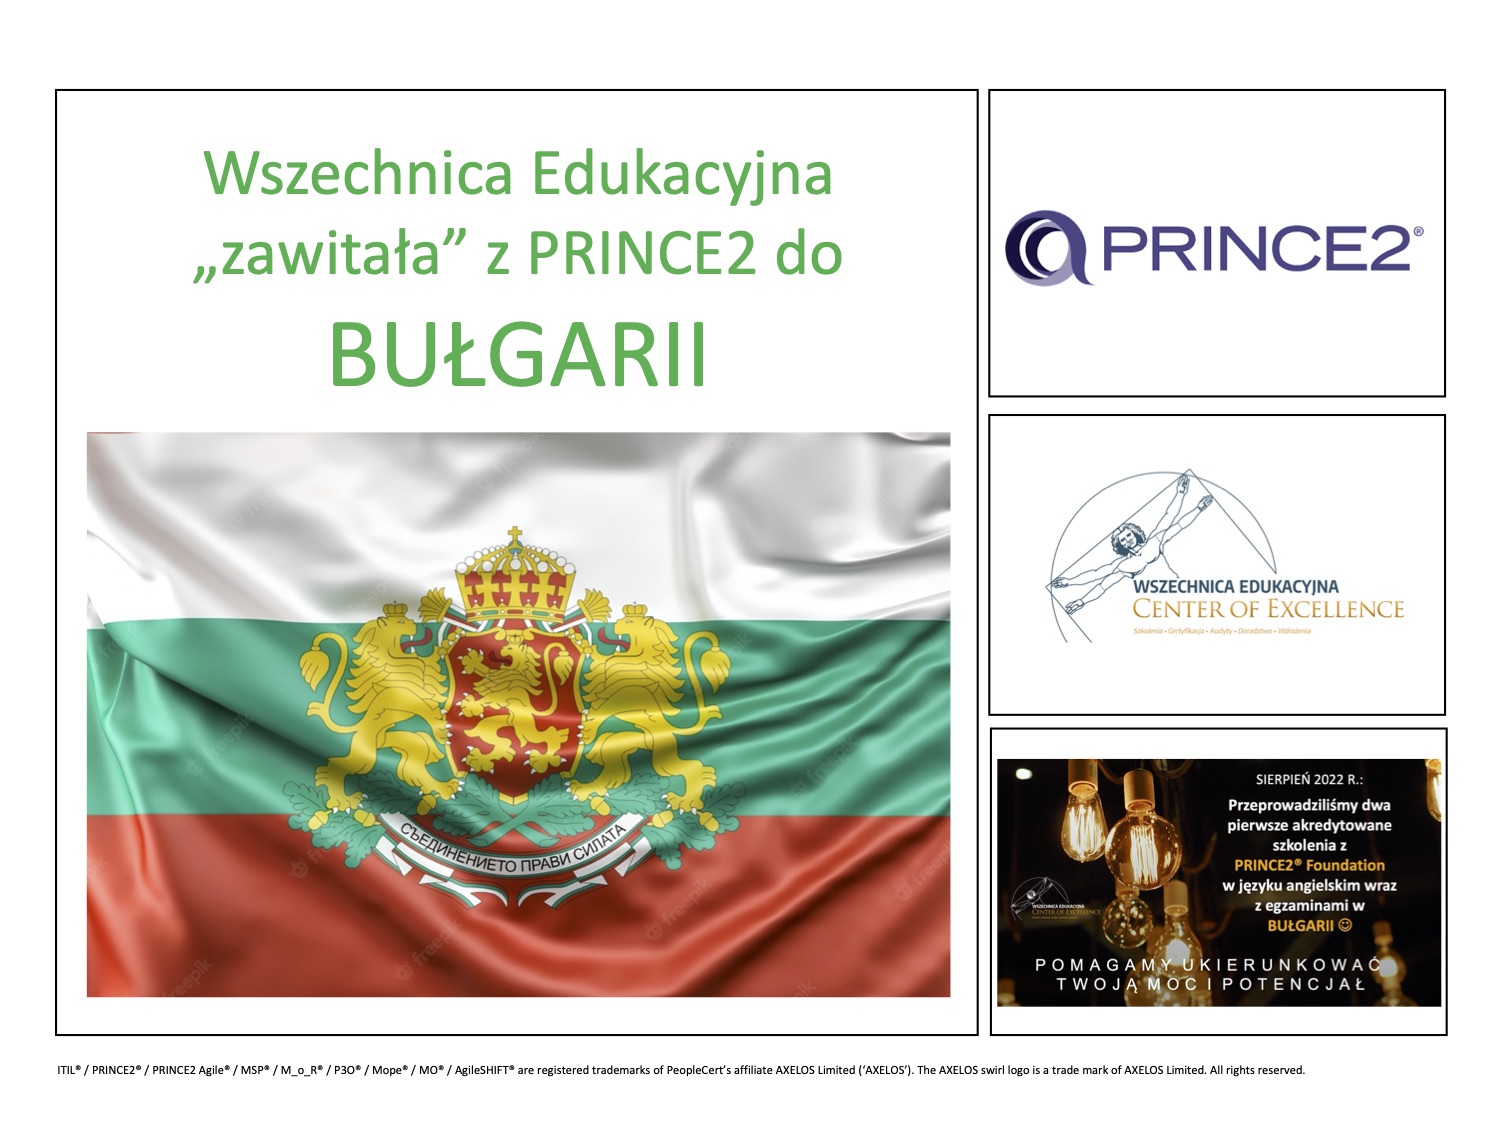 Bułgaria - PRINCE2 - Wszechnnica Edukacyjna.jpg